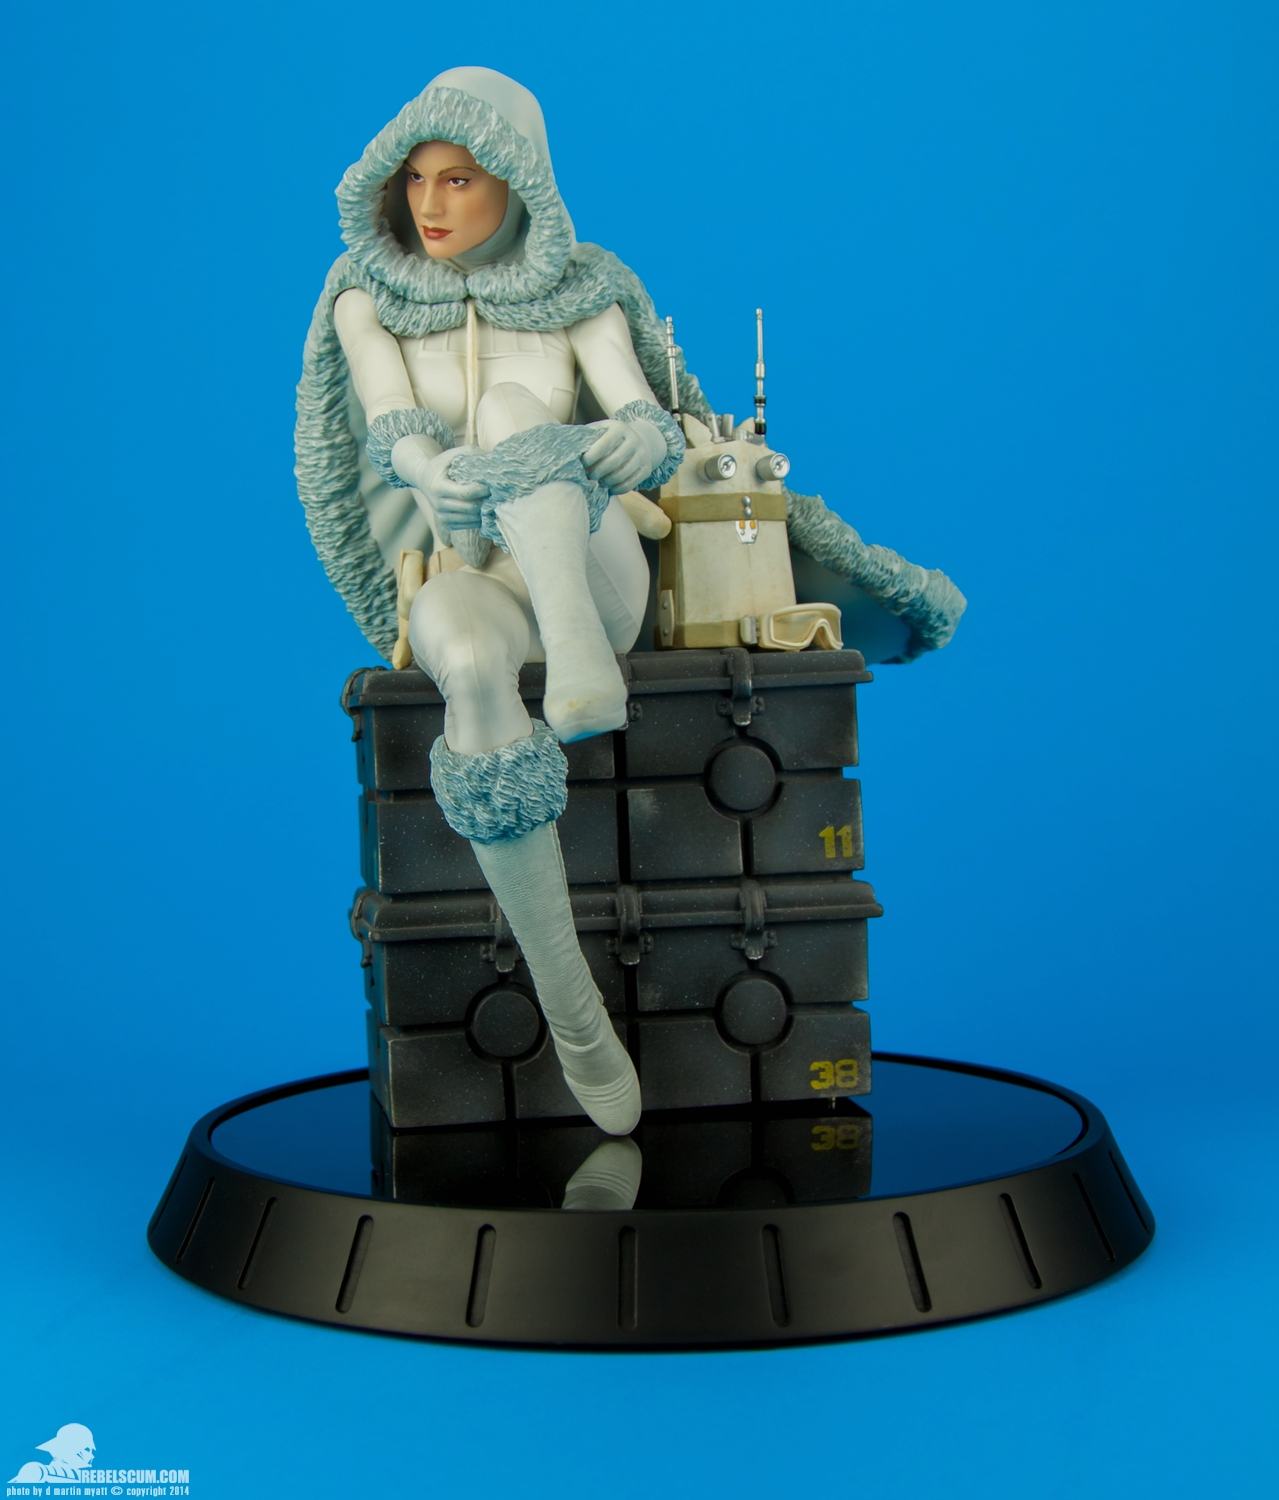 Padme-Amidala-Snowbunny-Statue-Gentle-Giant-Ltd-001.jpg